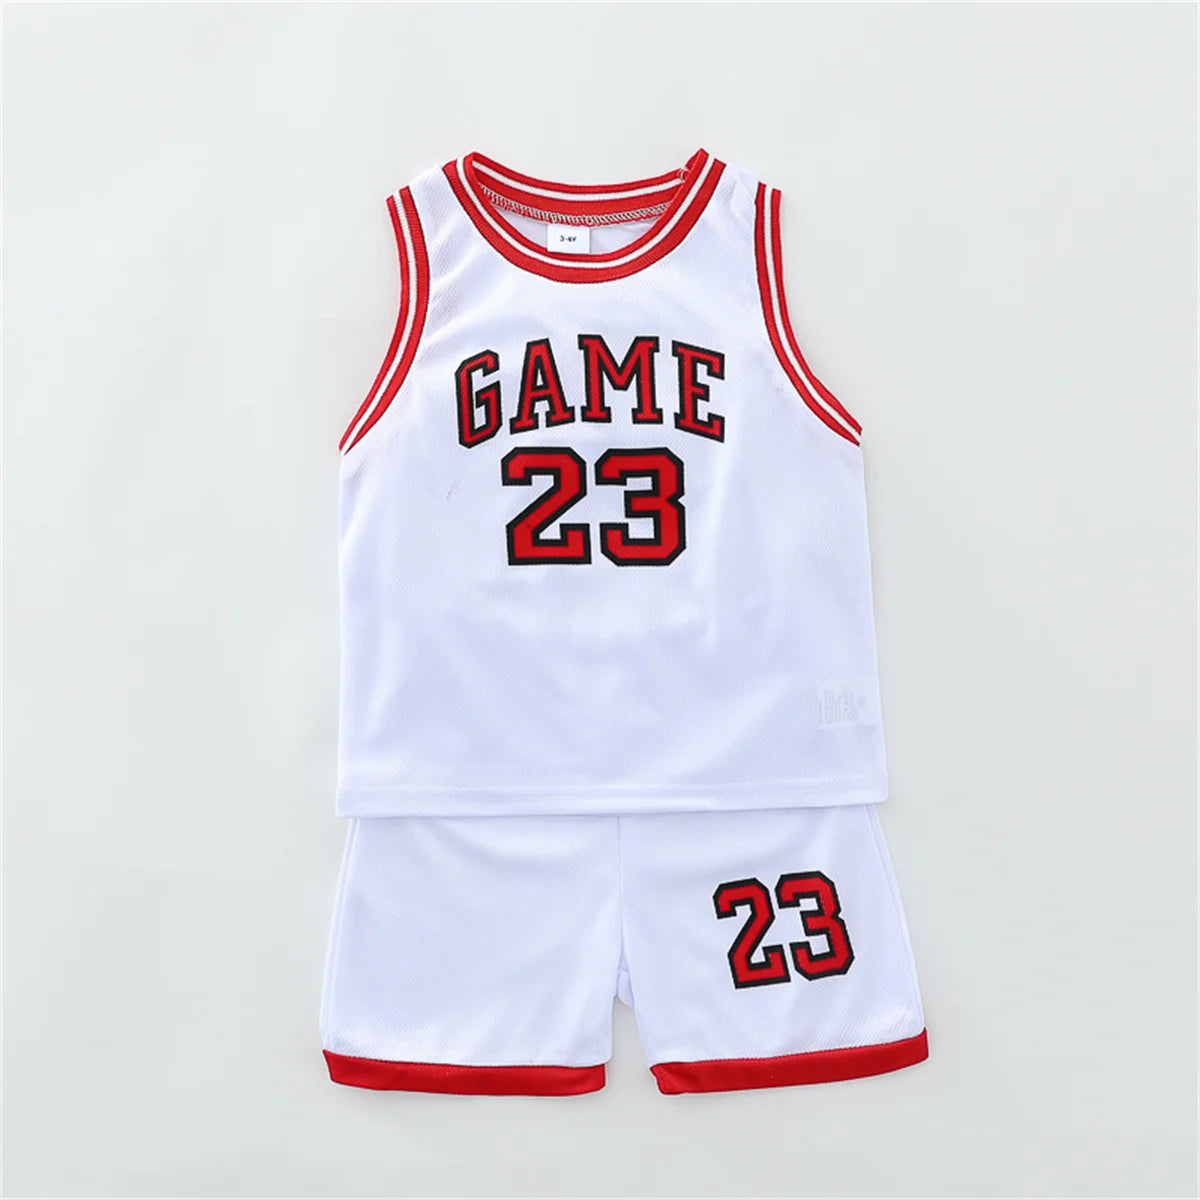 2PCS Children's Summer Fashion Basketball Suit-Ryan fashion product